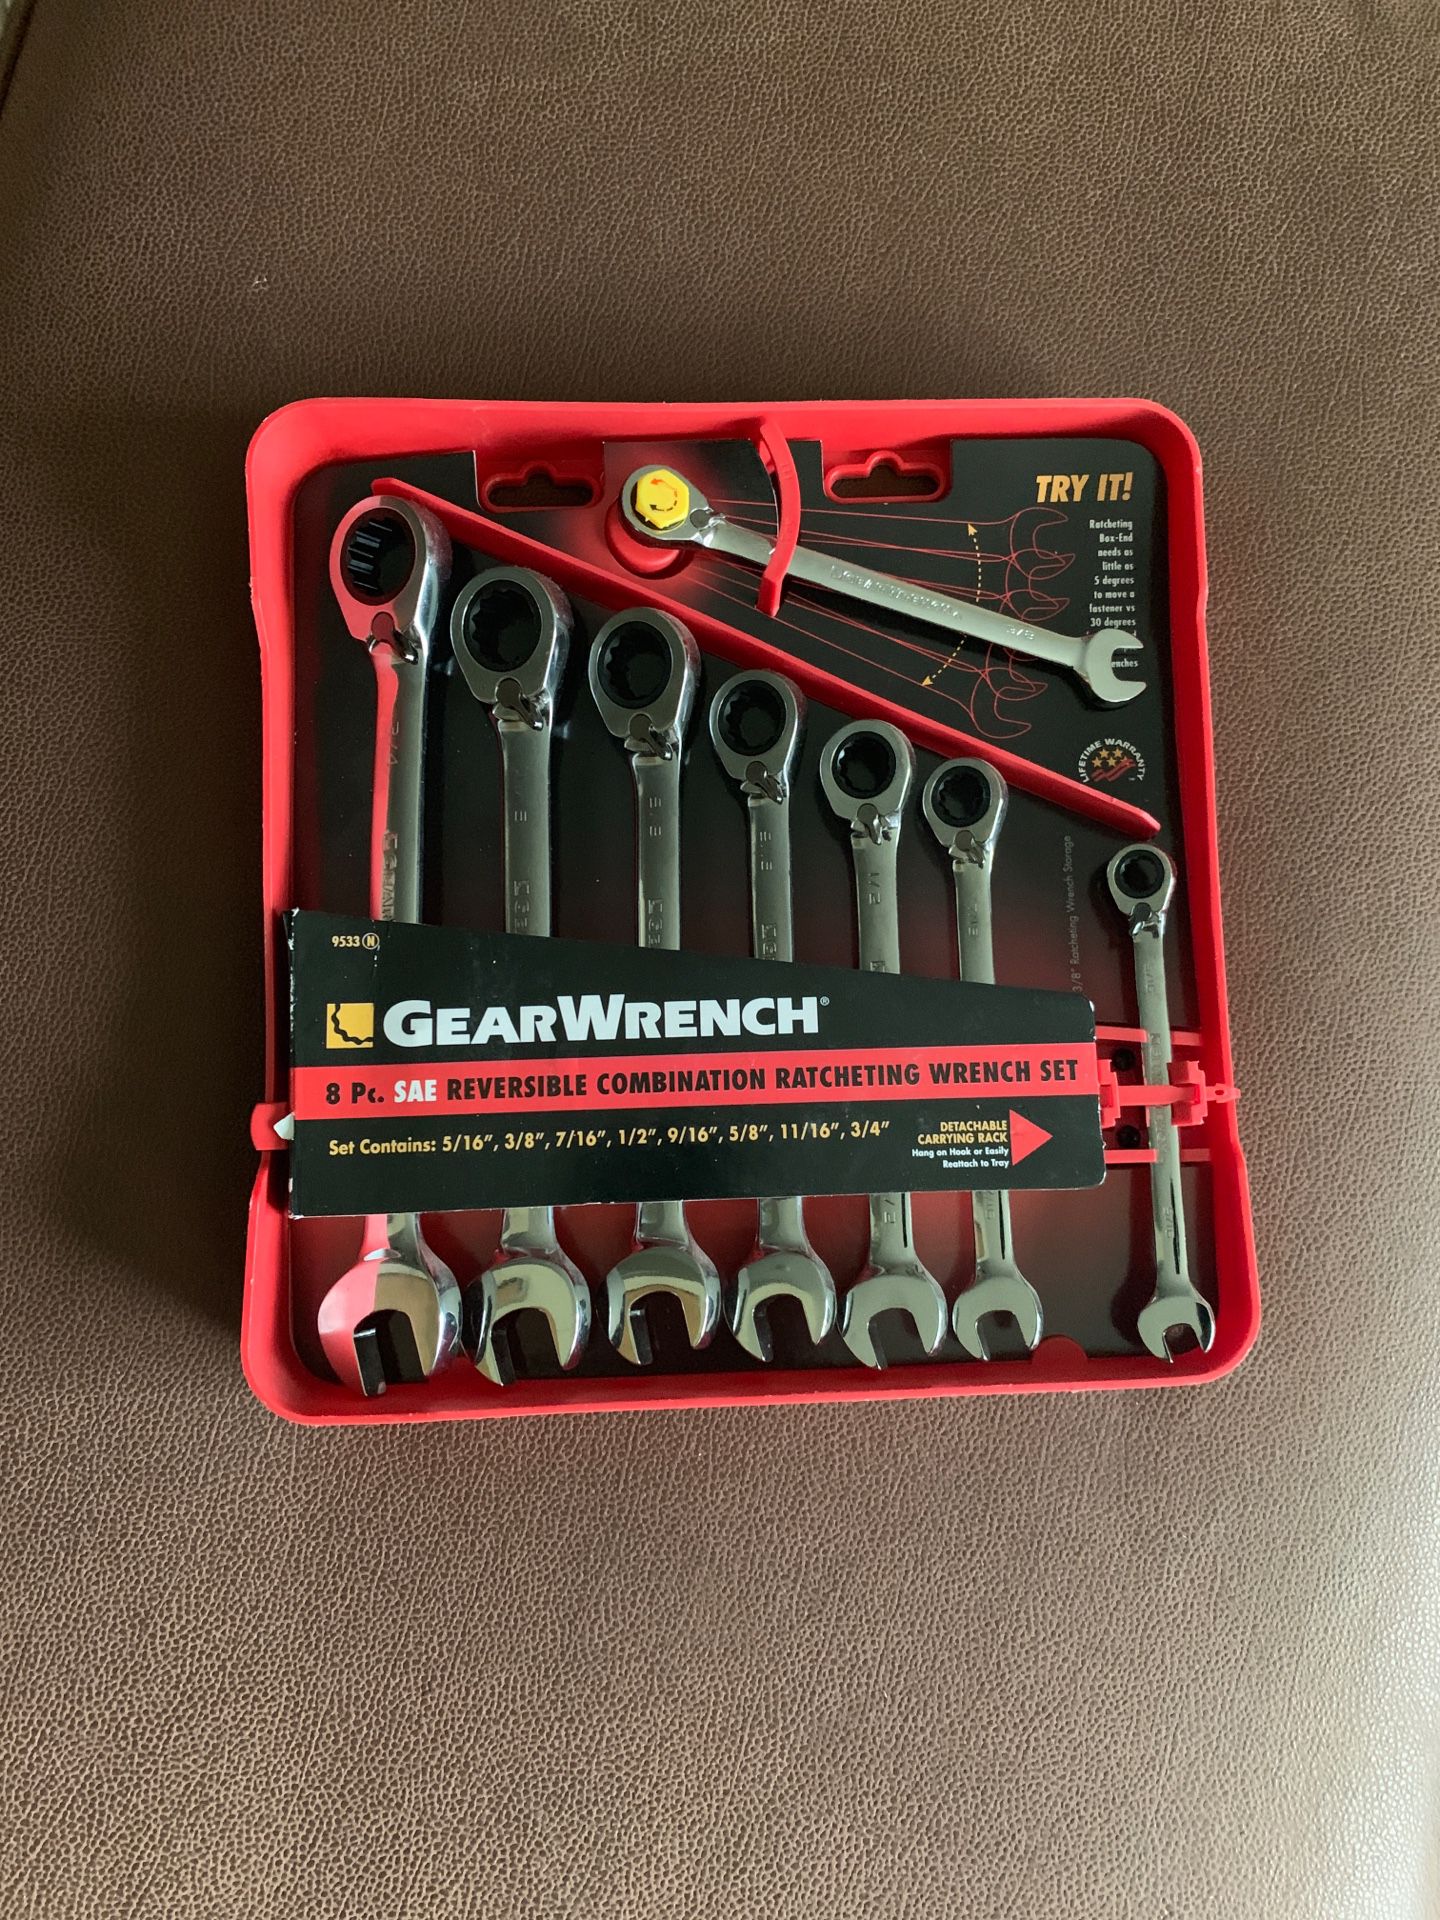 Gear wrench